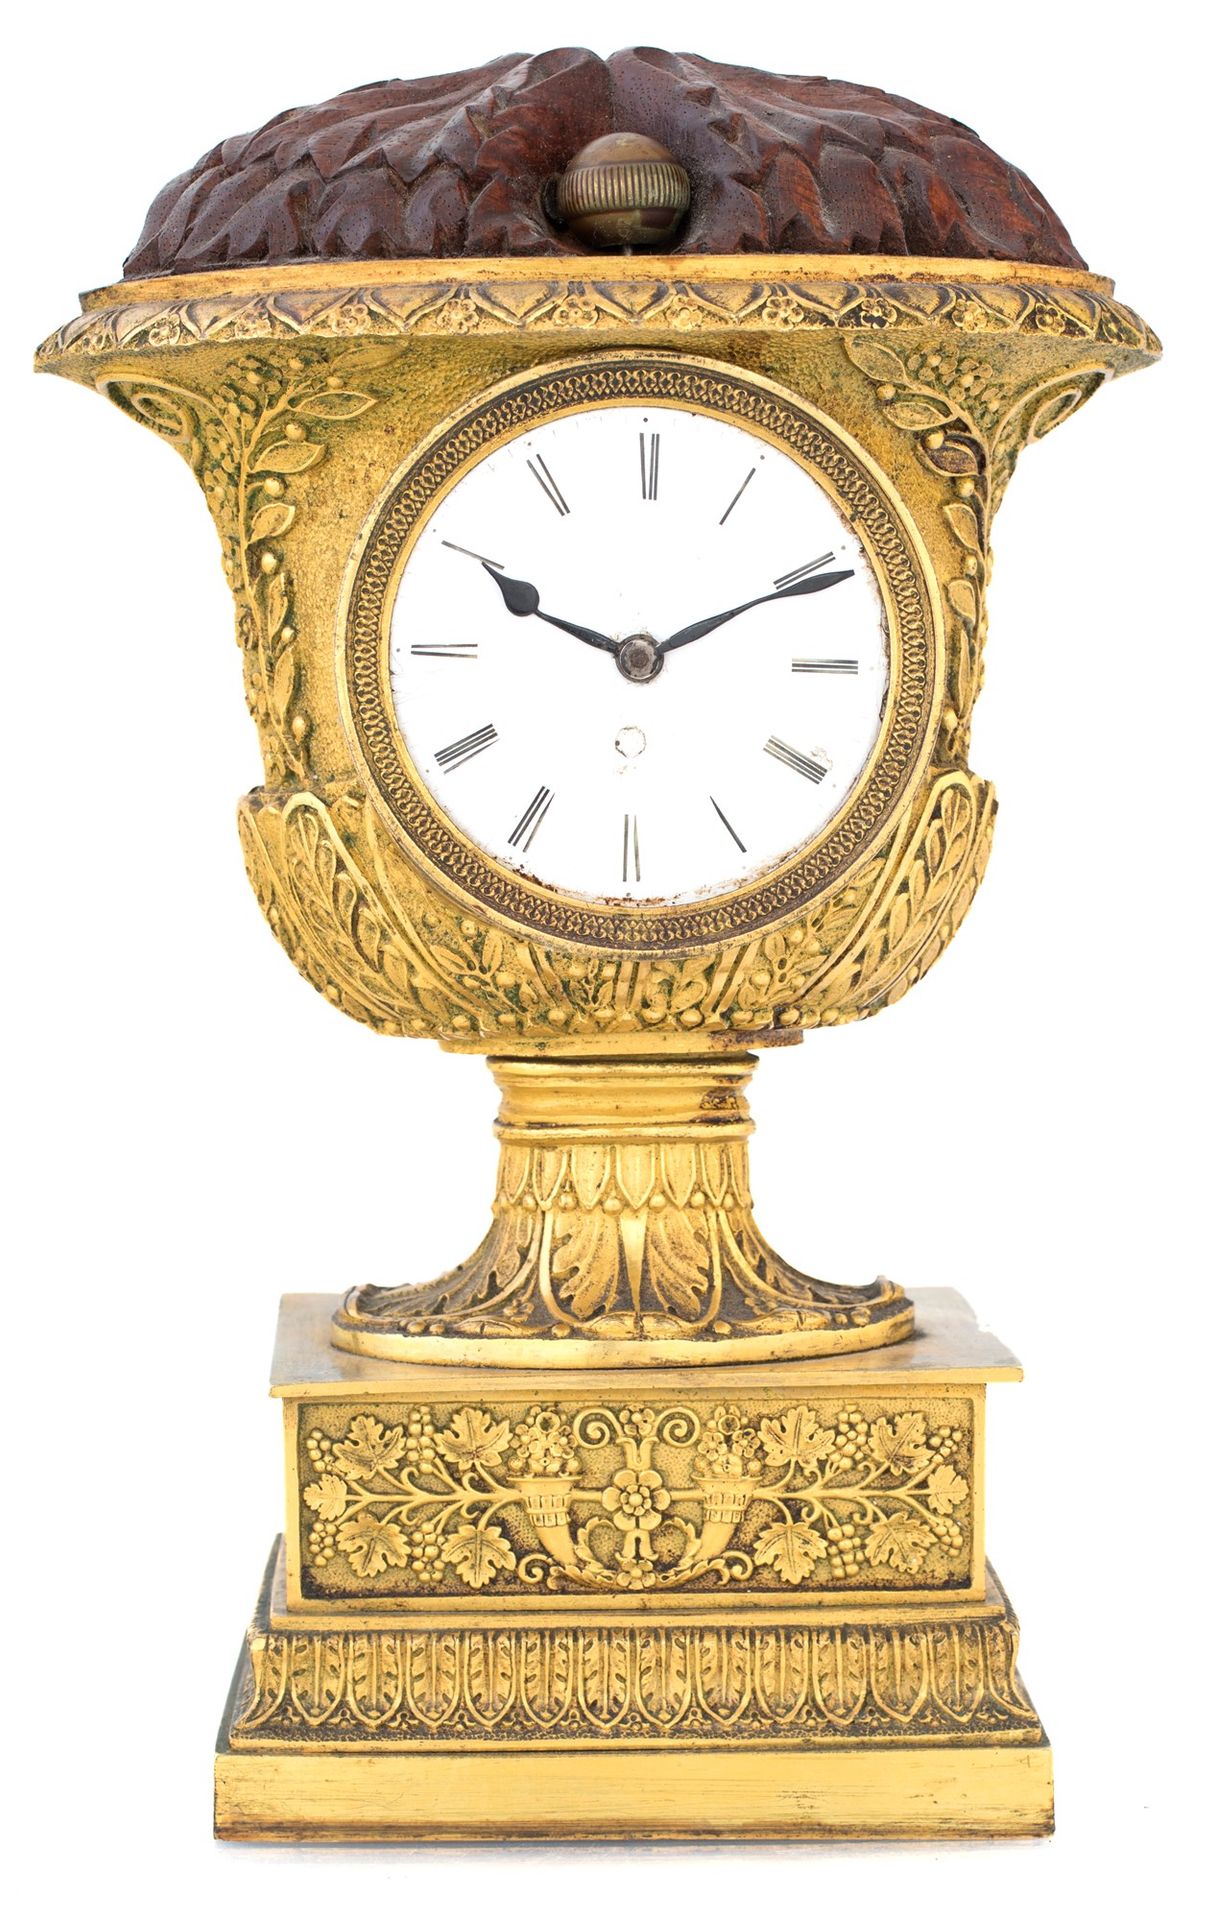 Table clock in bronze and wood 像一个精心凿制的杯子，上面有自然主义的图案，中心是一个带有罗马数字的白色珐琅表盘；顶部是雕刻的木材